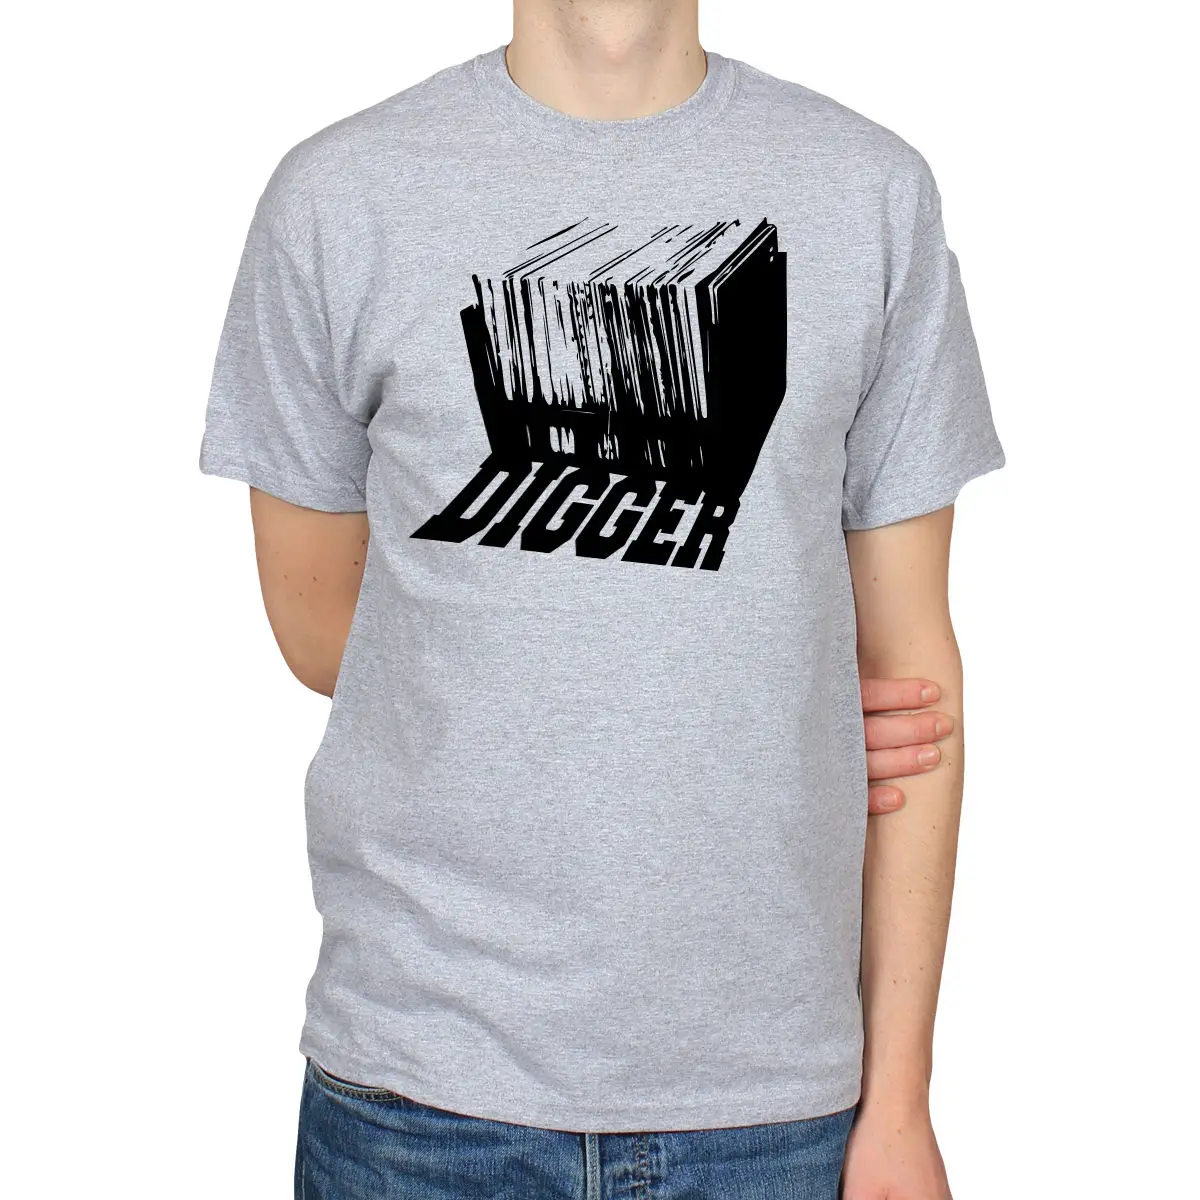 Professional Crate Digger Short-Sleeve Unisex T-Shirt